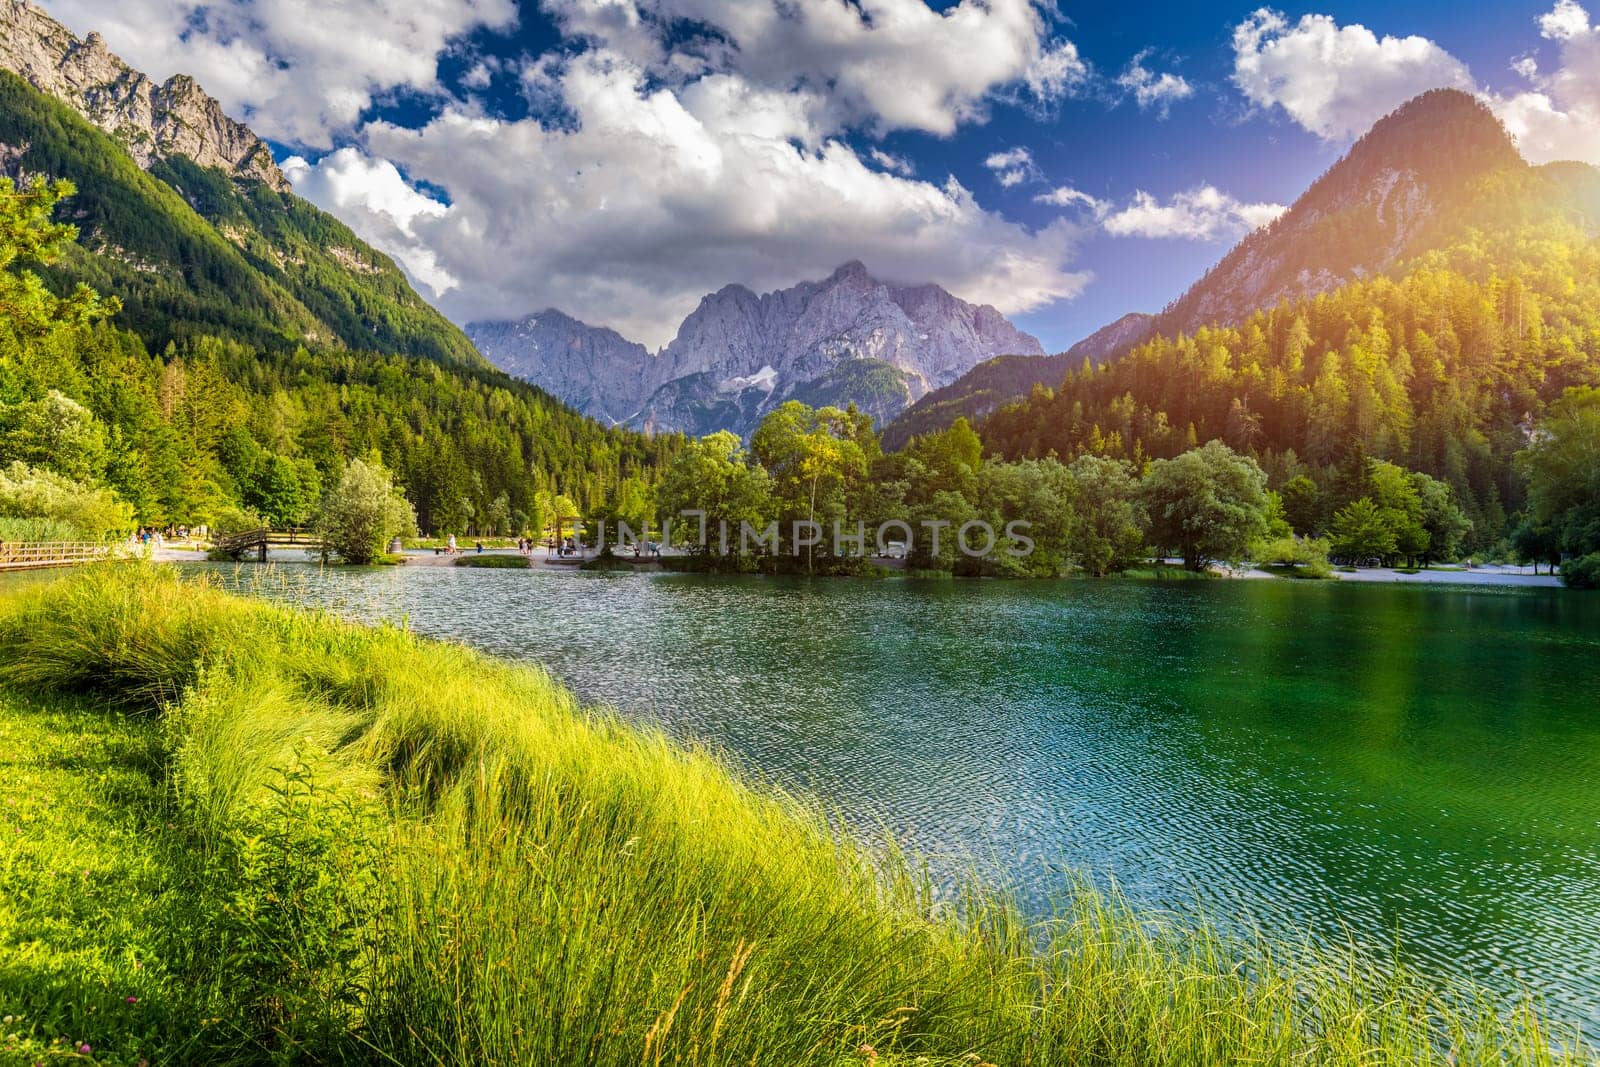 Jasna lake with beautiful mountains. Nature scenery in Triglav national park. Location: Triglav national park. Kranjska Gora, Slovenia, Europe. Mountain lake Jasna in Krajsnka Gora, Slovenia.  by DaLiu